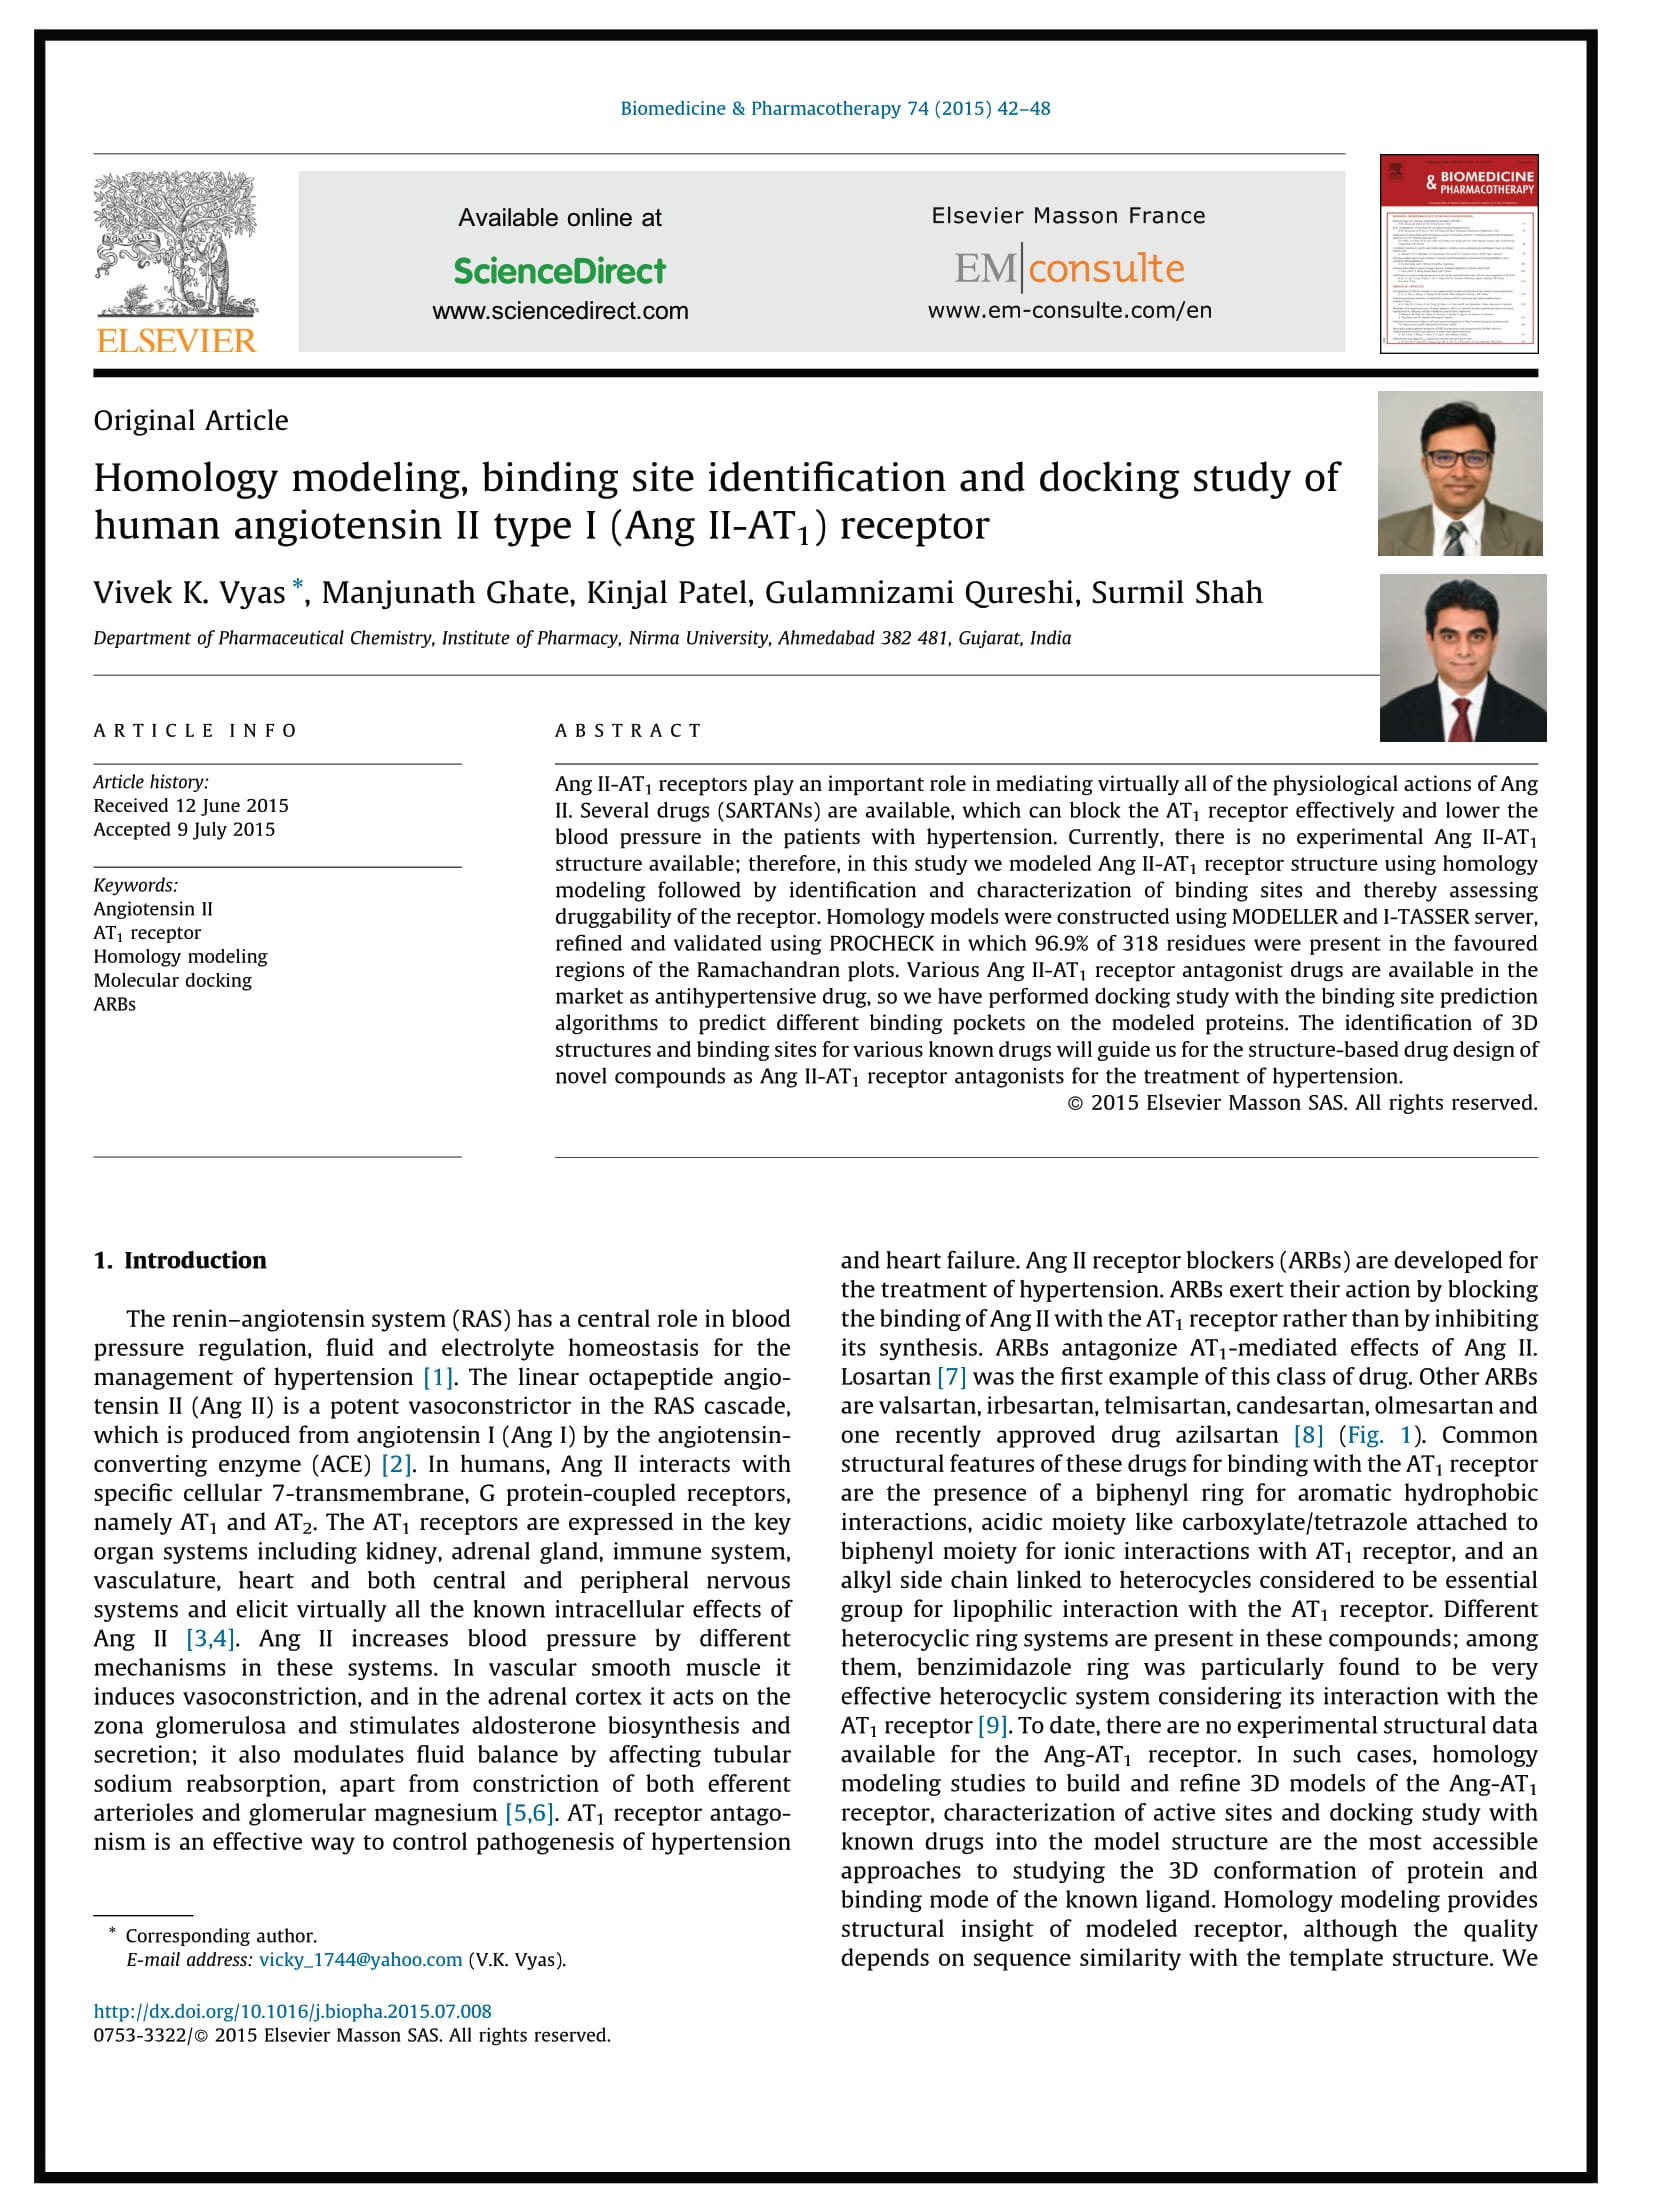 Homology modeling, binding site identification and docking study of human angiotensin II type I (Ang II-AT1) receptor